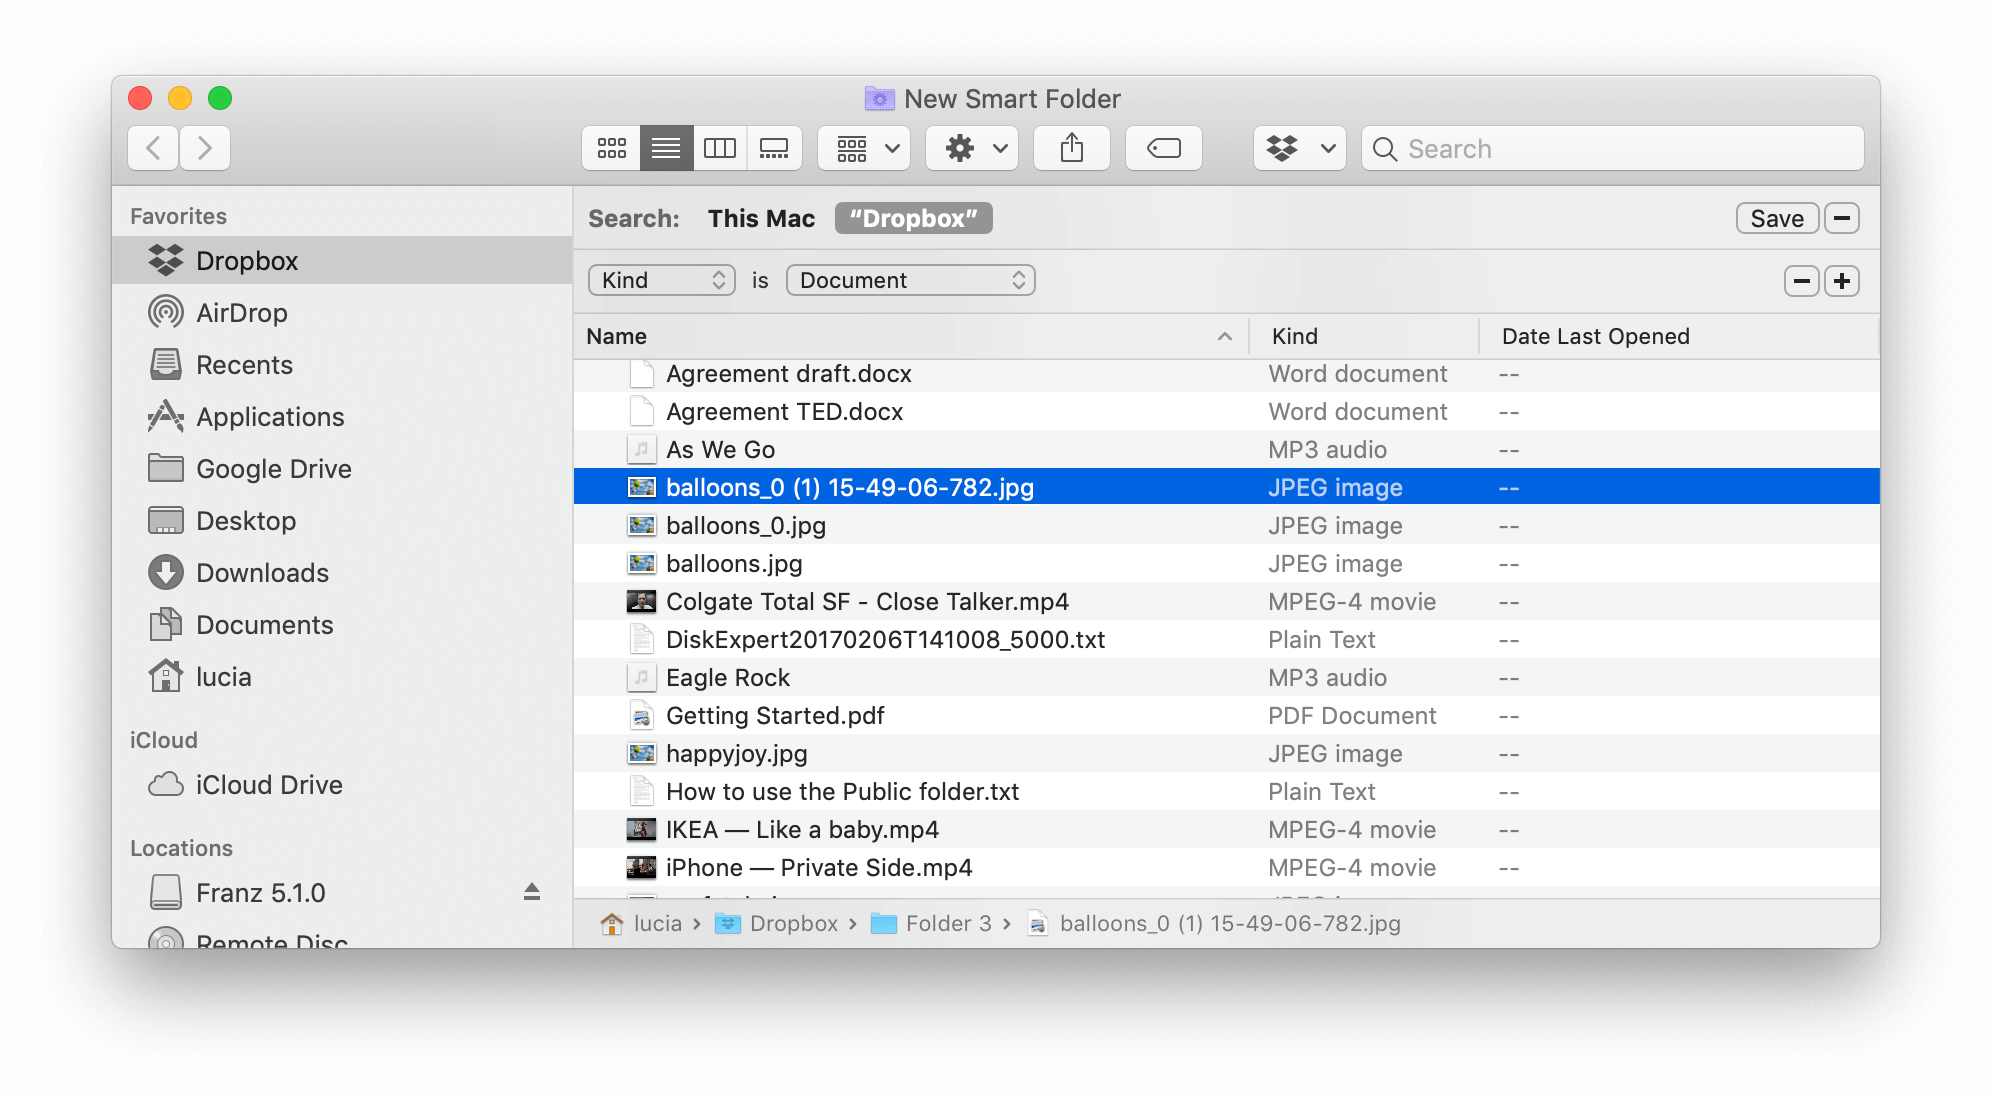 Dropbox selected for Smart Folder